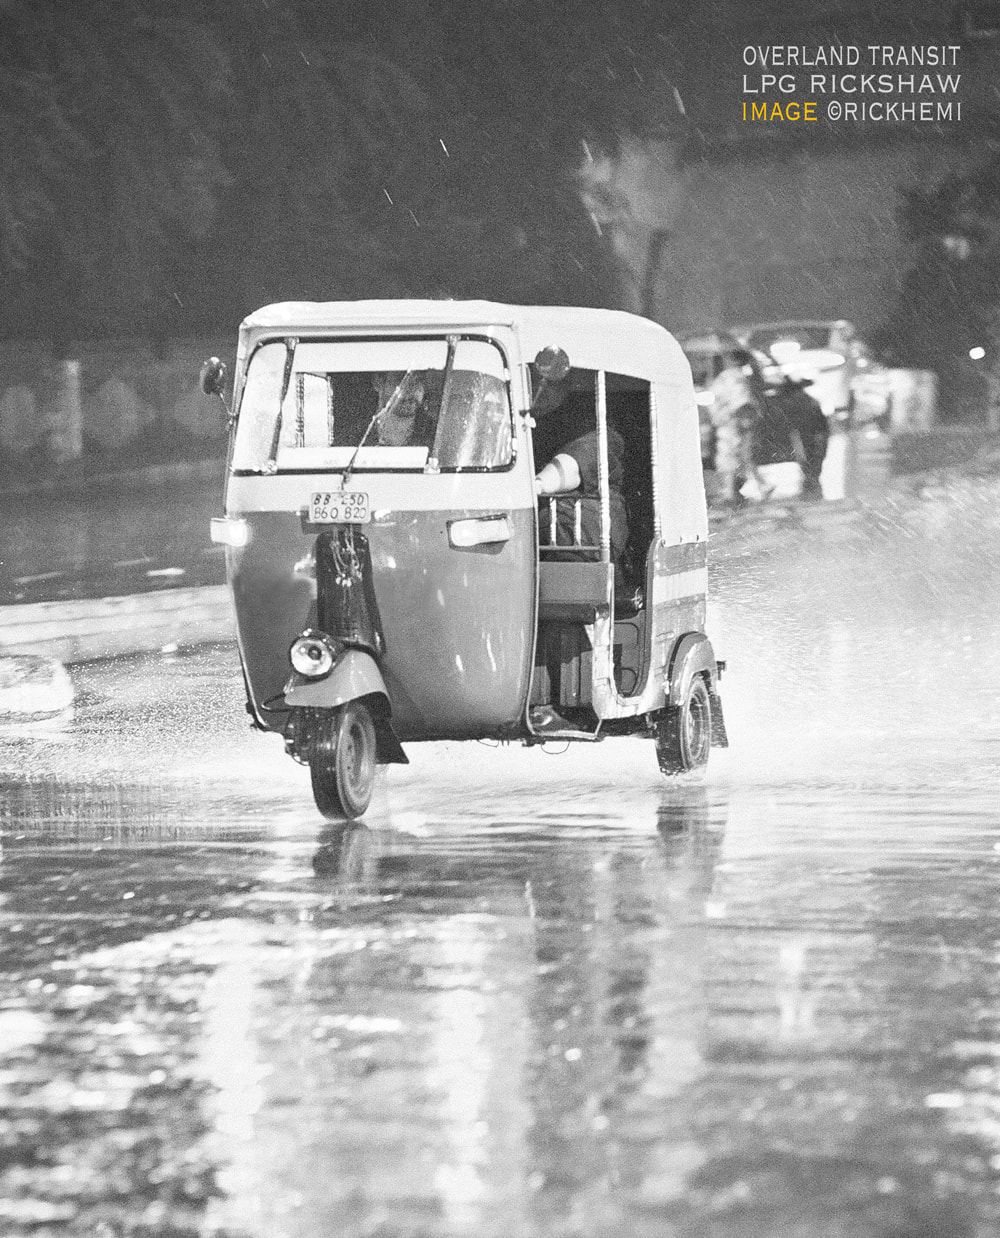 solo overland travel and transit, night monsoon rickshaw  in transit, image by Rick Hemi